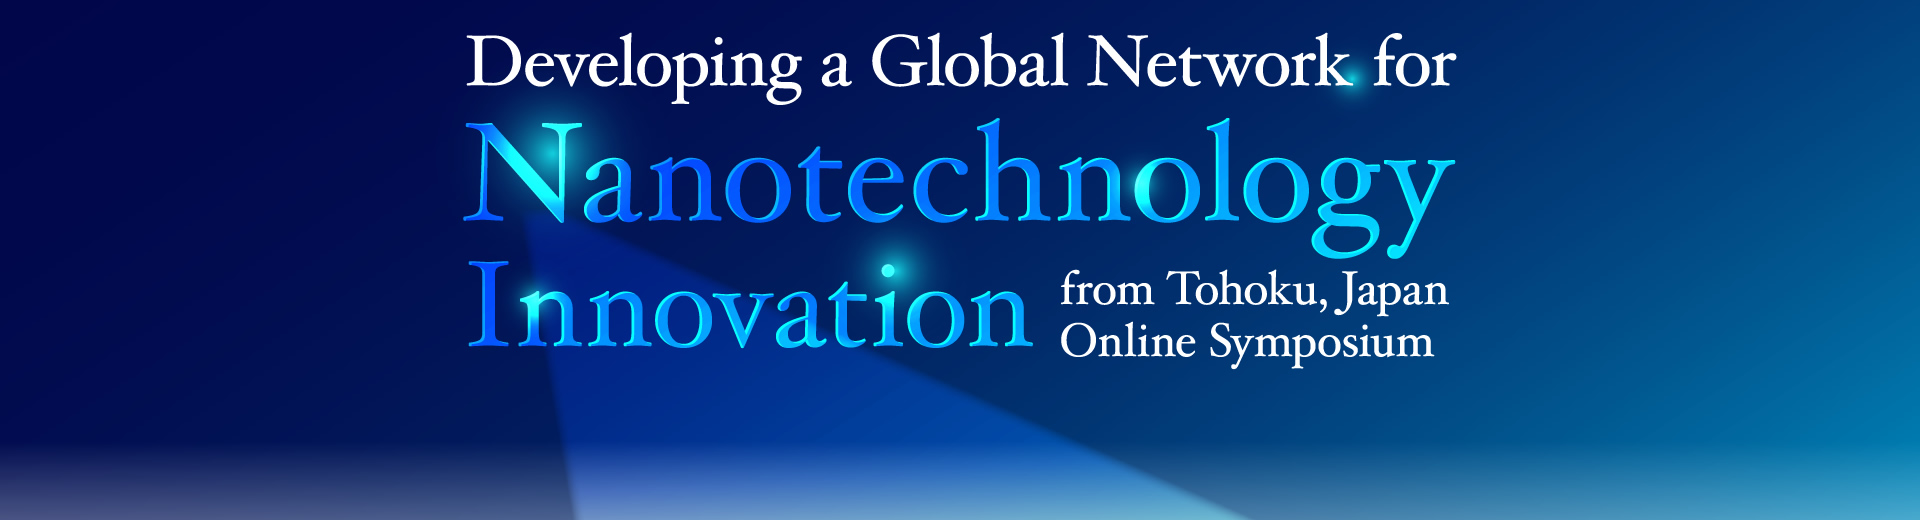 Developing a Global Network for Nanotechnology Innovation